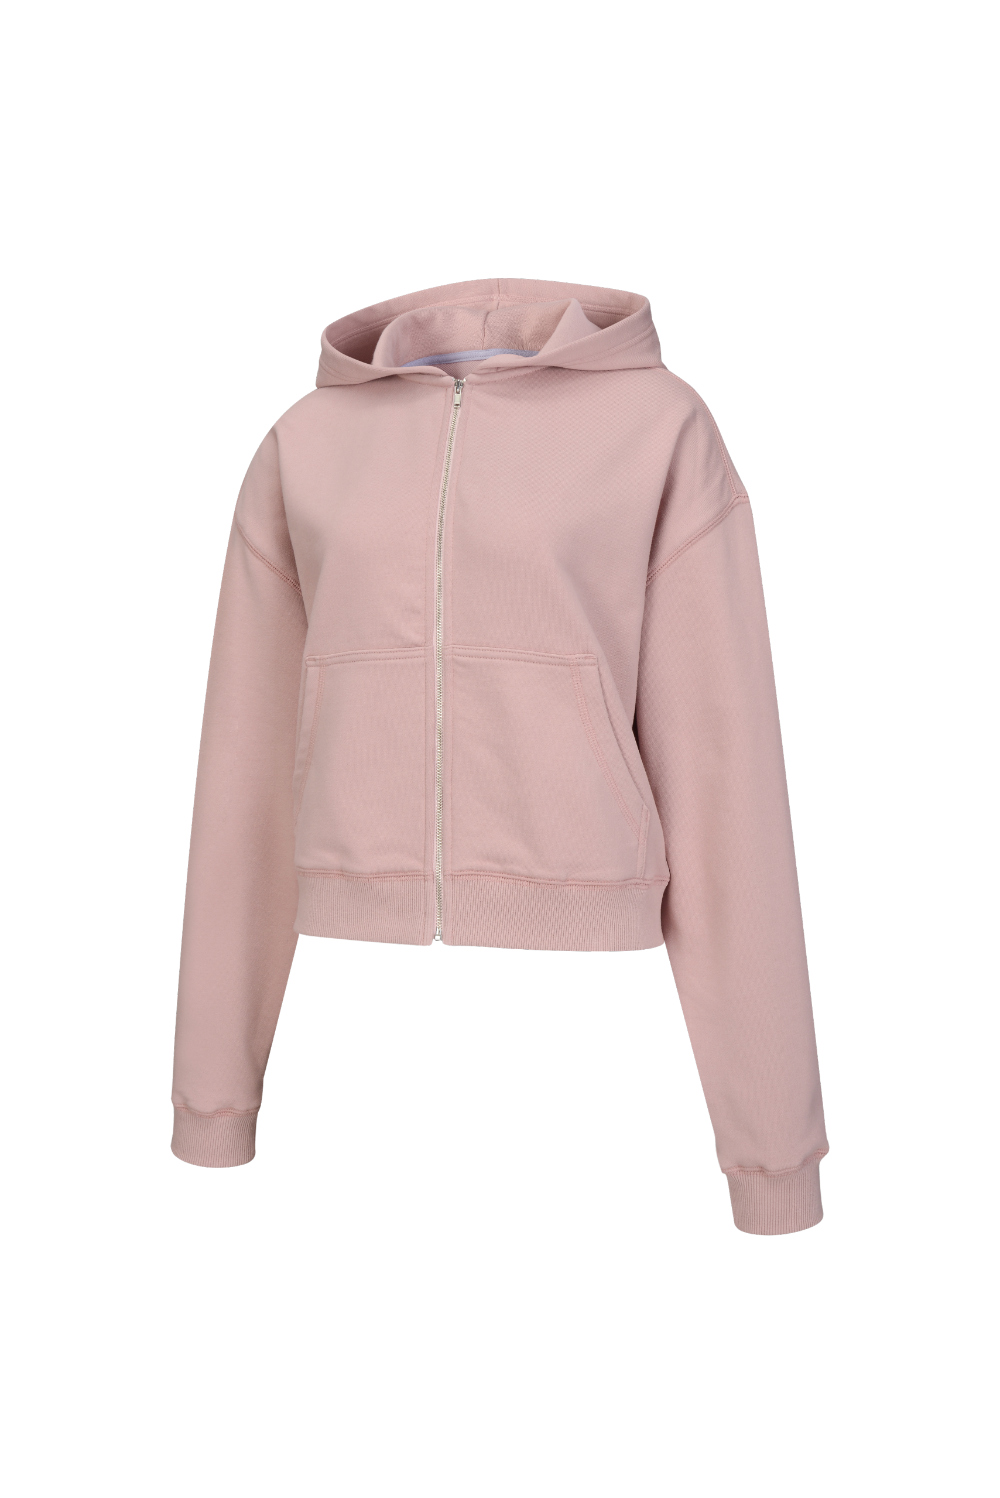 jacket baby pink color image-S1L34